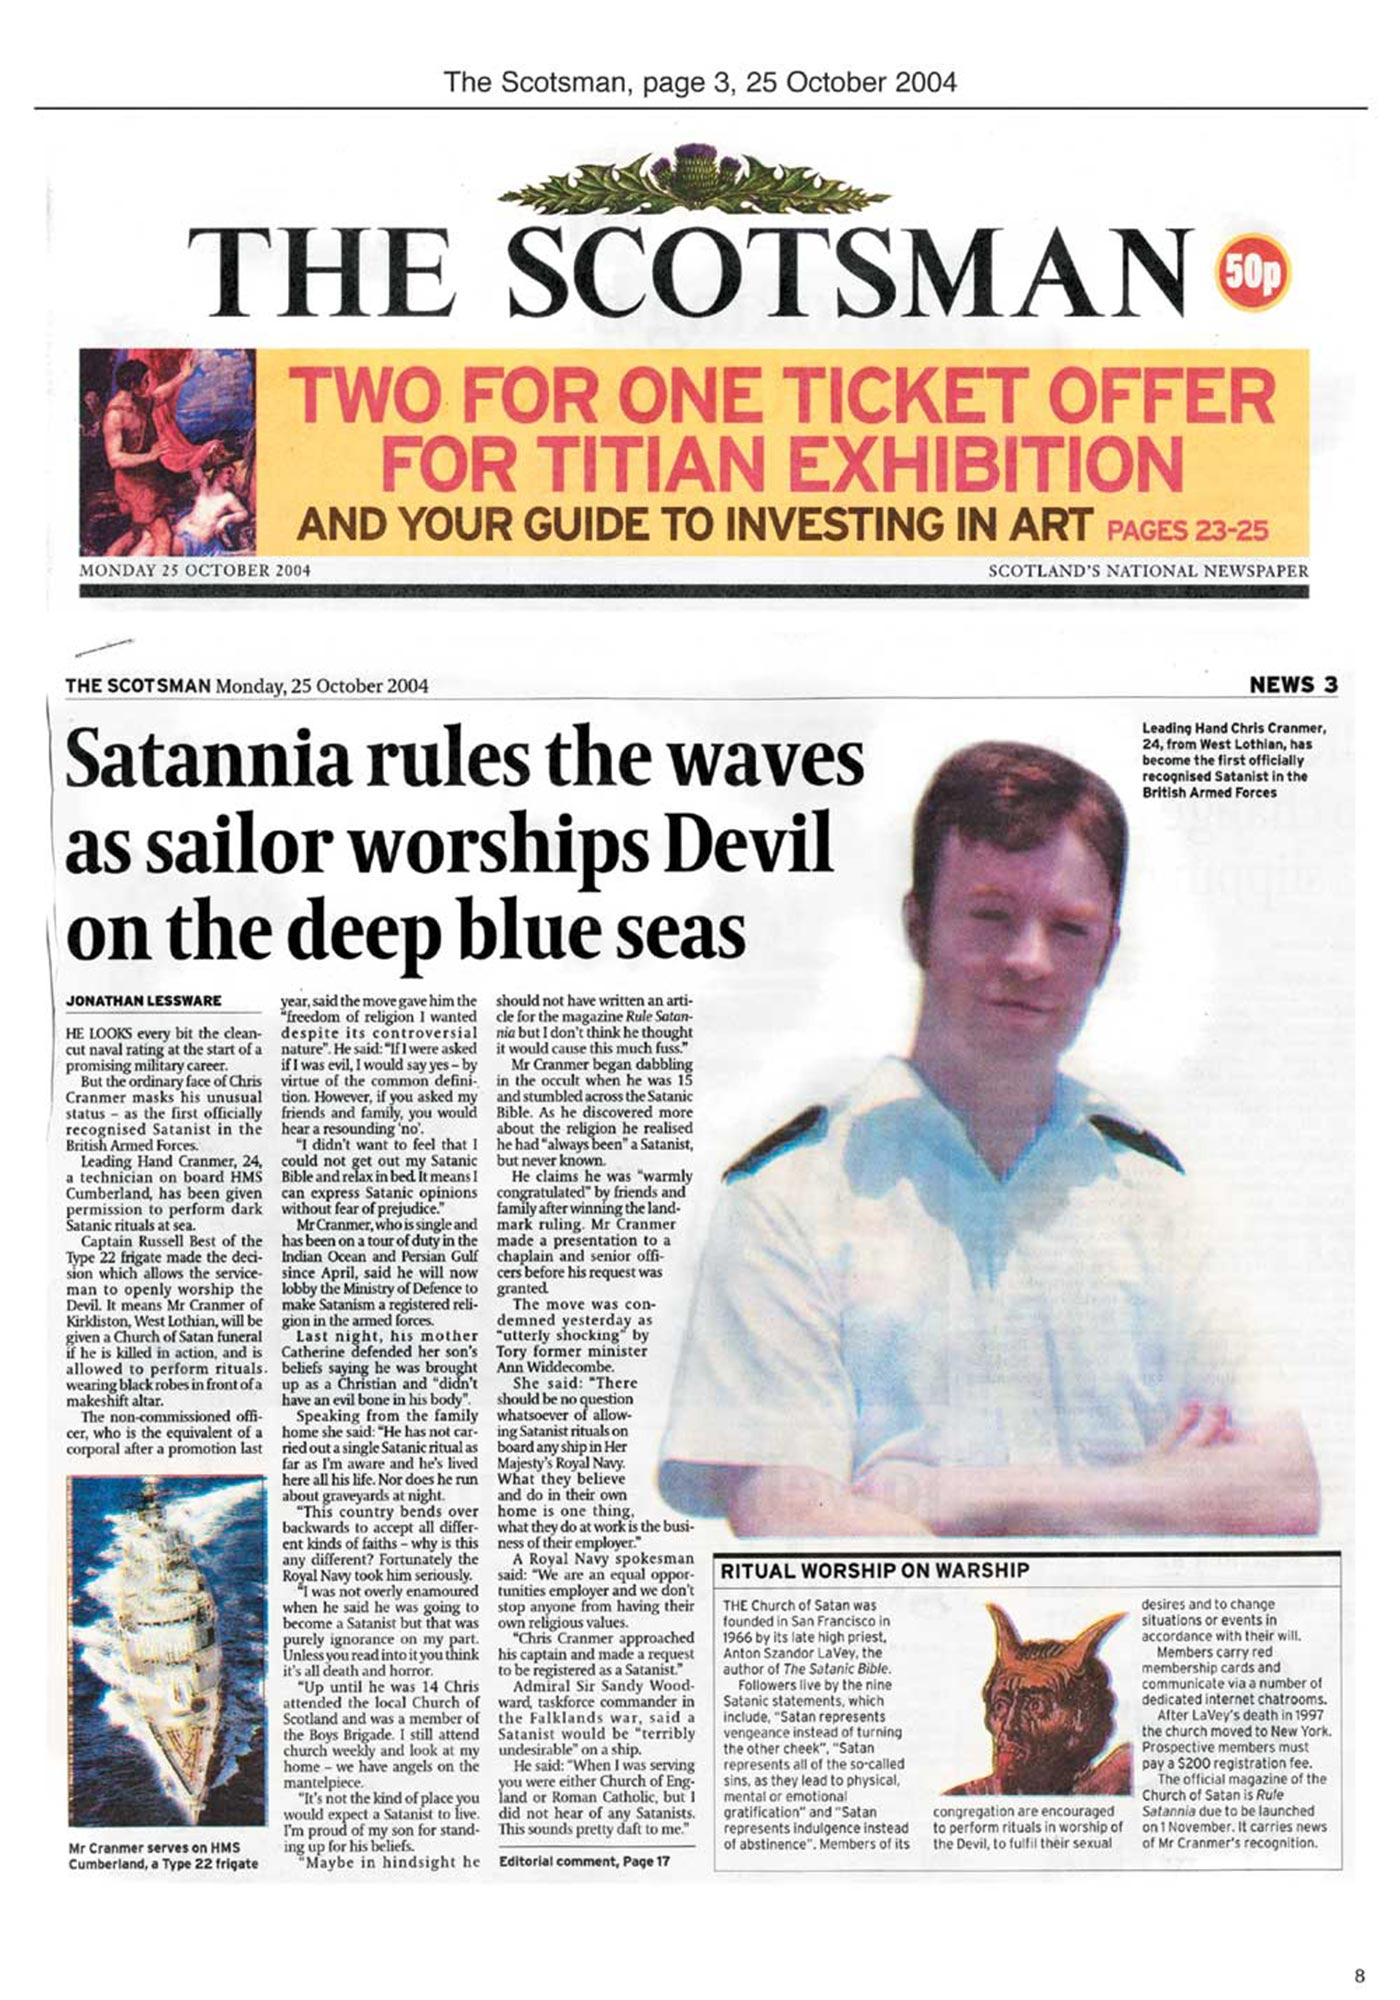 The Scotsman October 2004